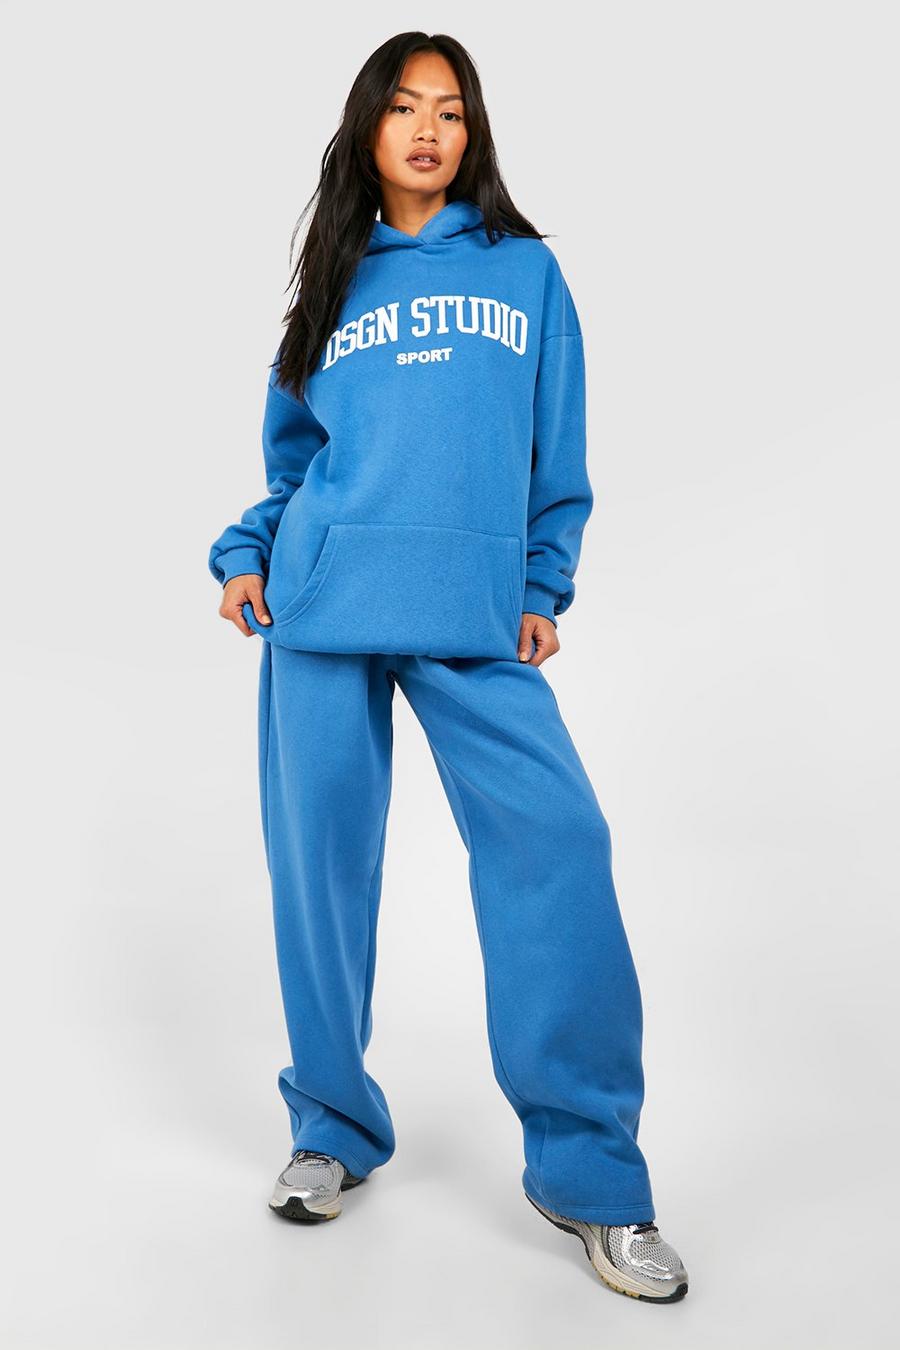 Oversize Trainingsanzug mit Dsgn Studio Sports Slogan und Kapuze, Blue